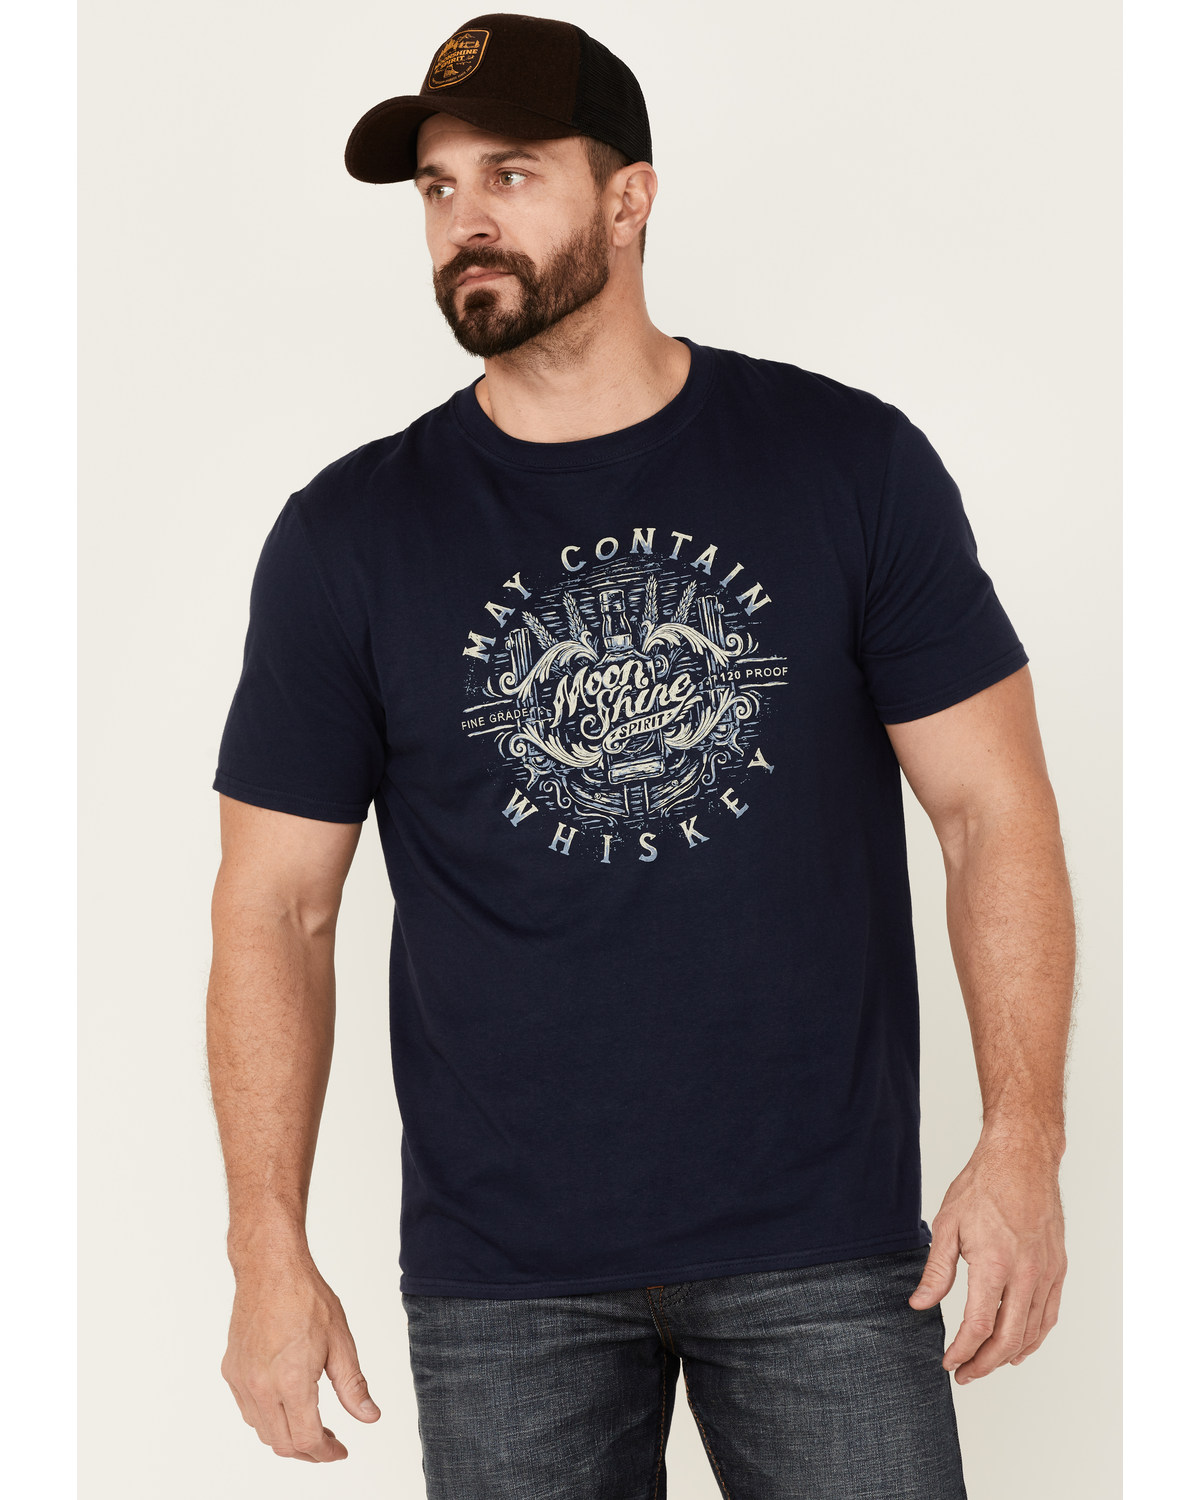 Moonshine Spirit Men's May Contain Whiskey Graphic Short Sleeve T-Shirt